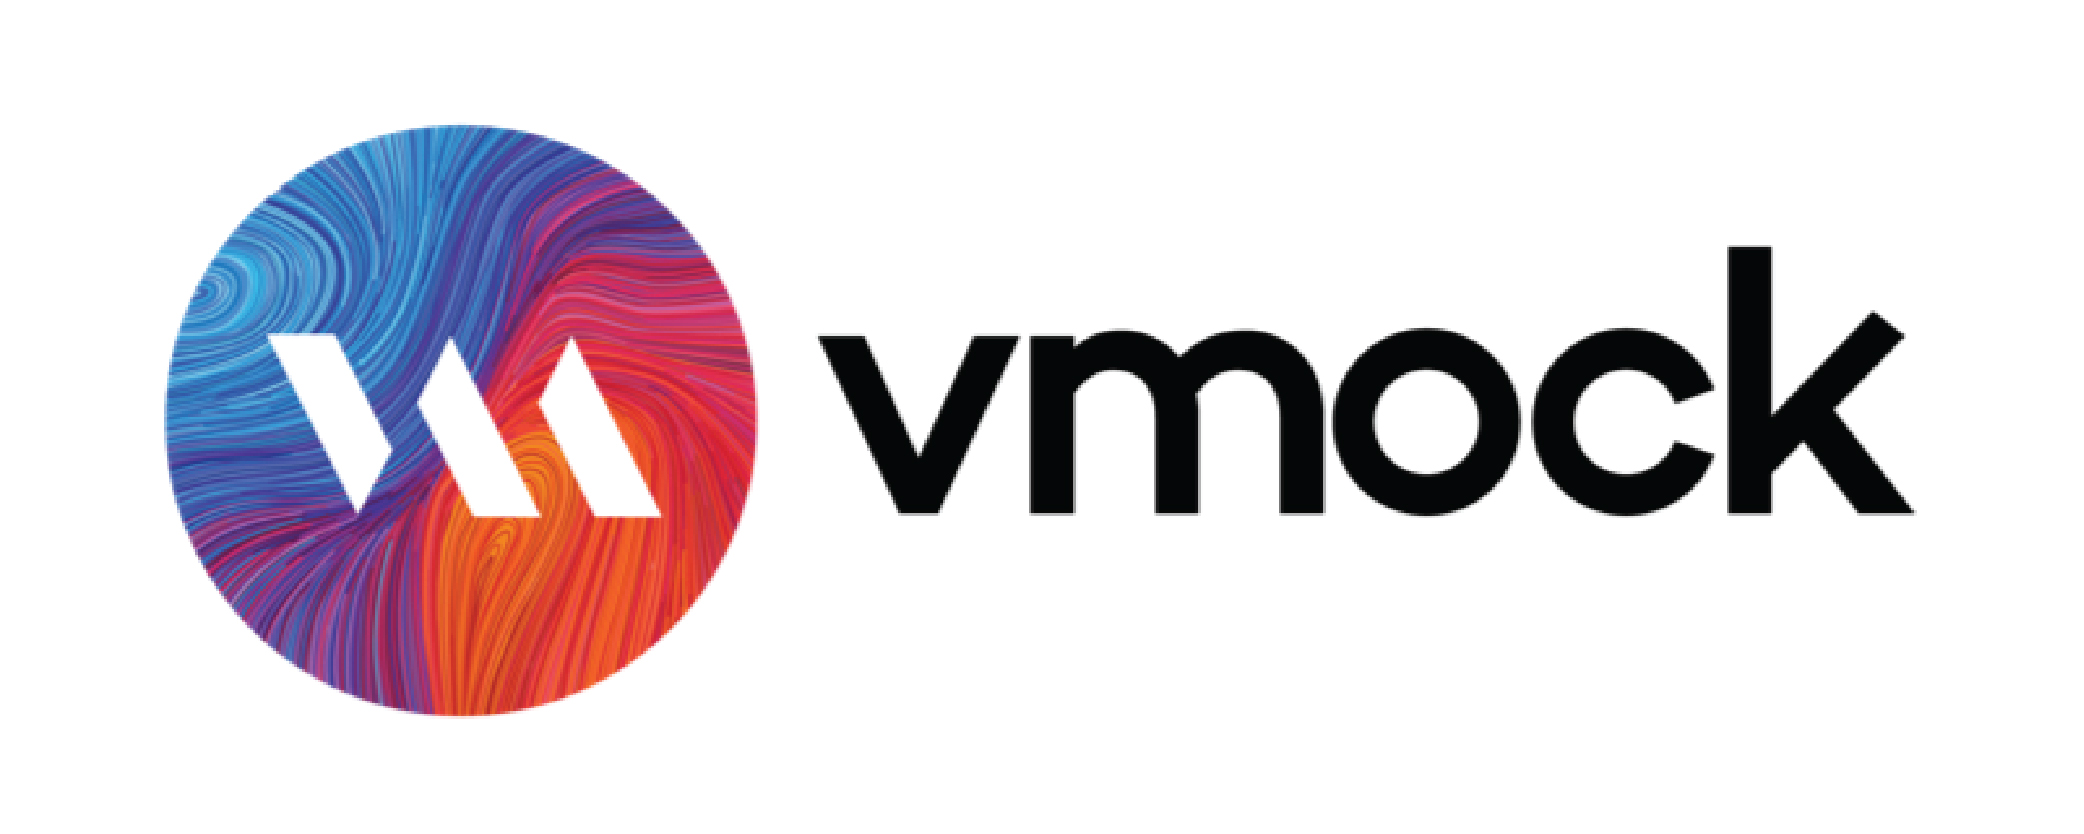 VMock Logo